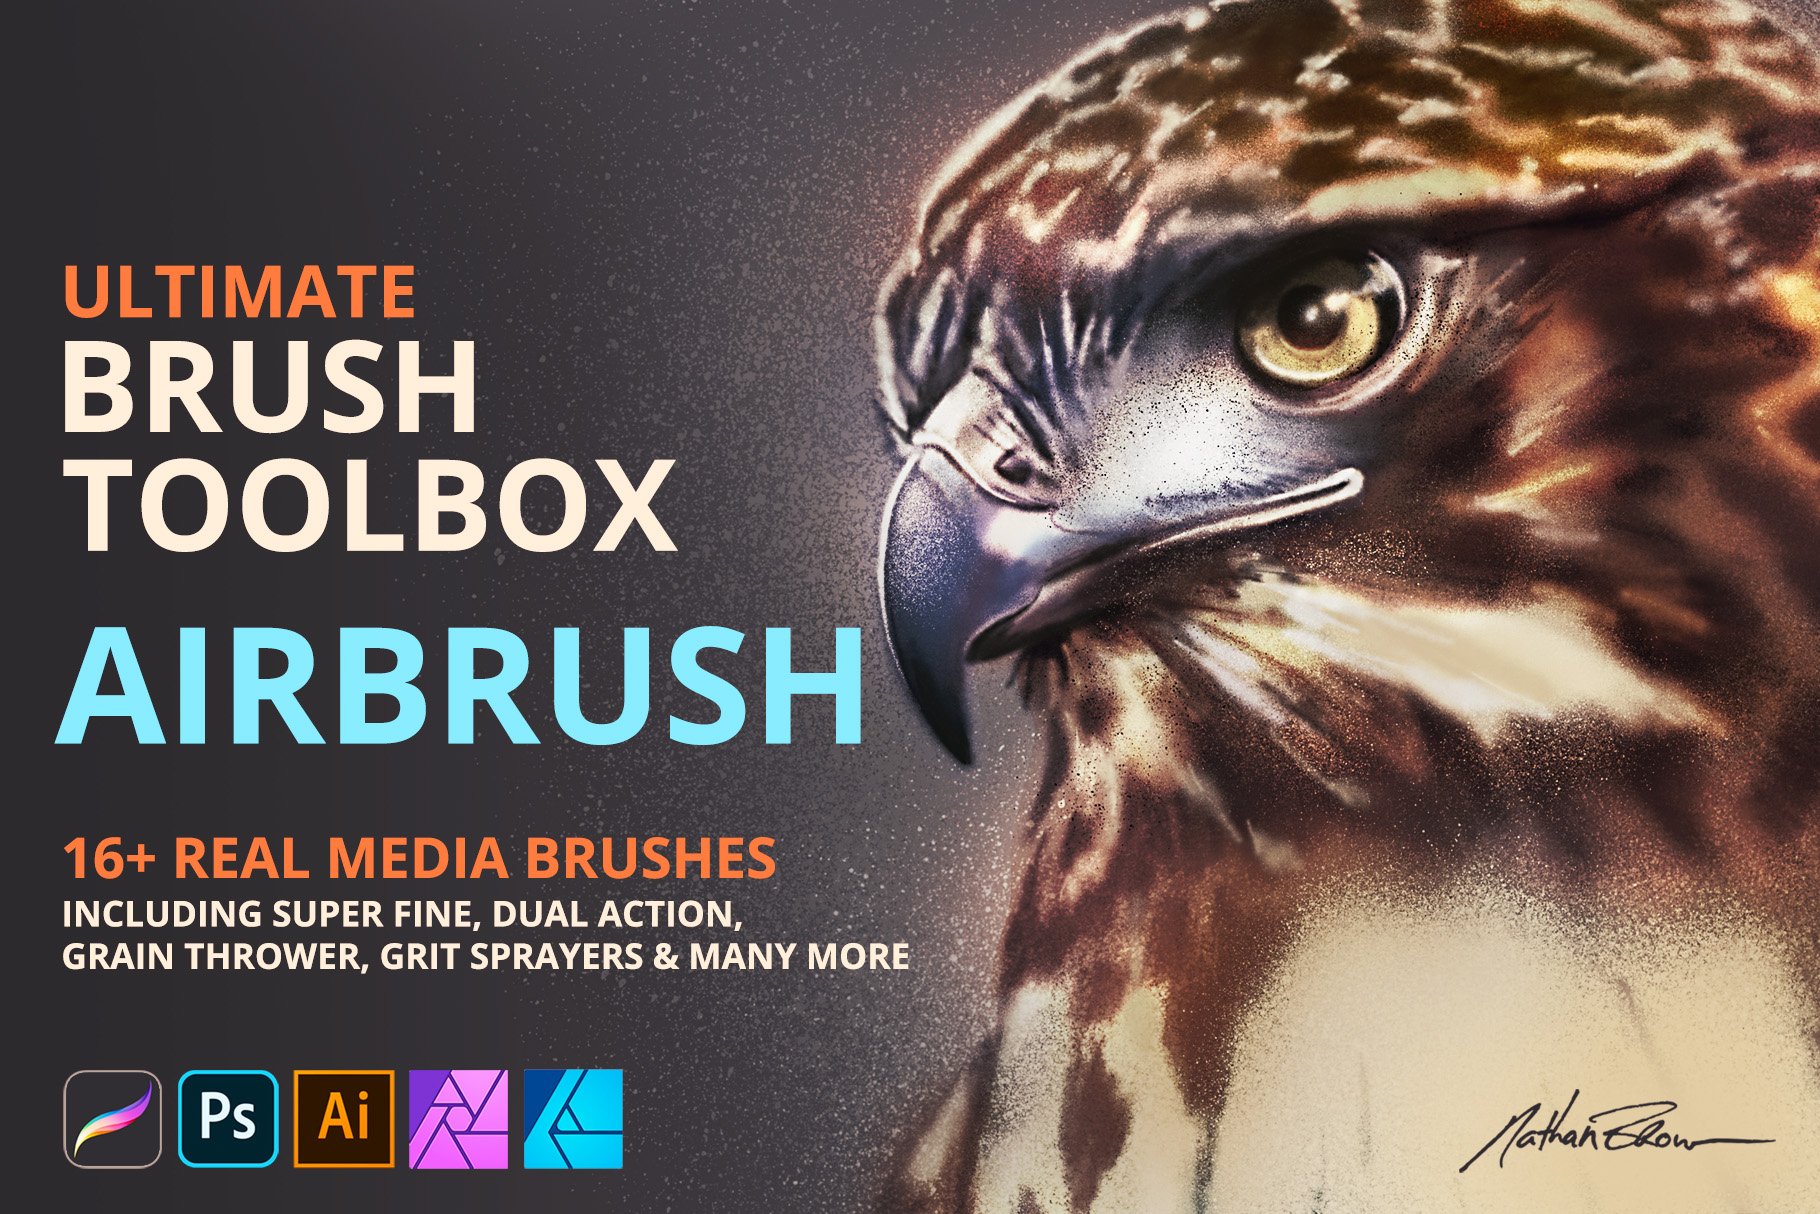 Ultimate Brush Toolbox - Airbrush